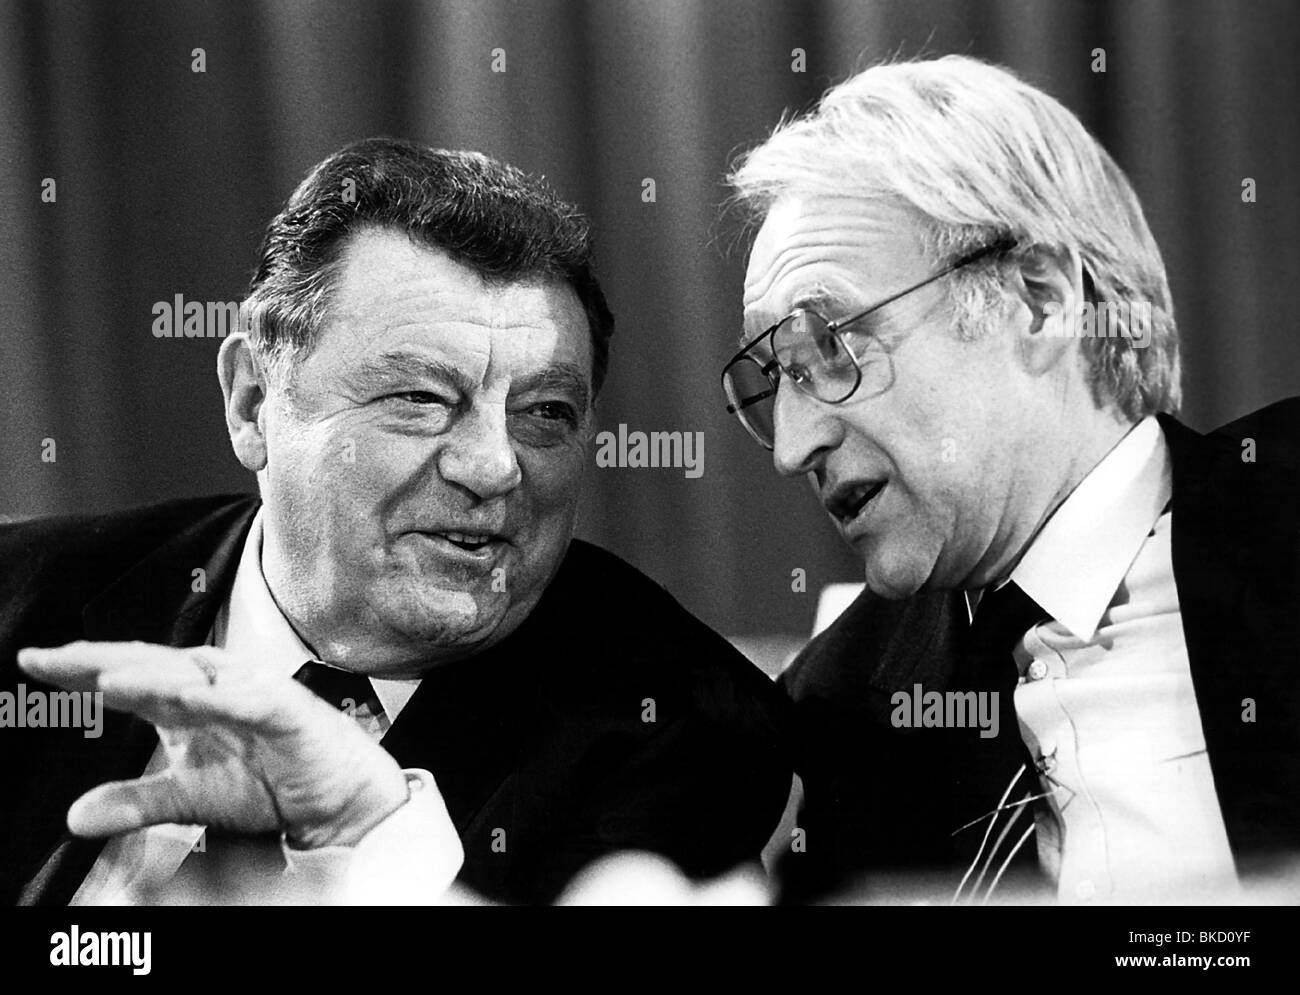 Strauss, Franz Josef, 6.9.1915 - 3.10.1988, German politician (CSU), Minister President of Bavaria, portrait, with Edmund Stoiber, CSU party conference, Munich, 22./23.11.1985, Stock Photo